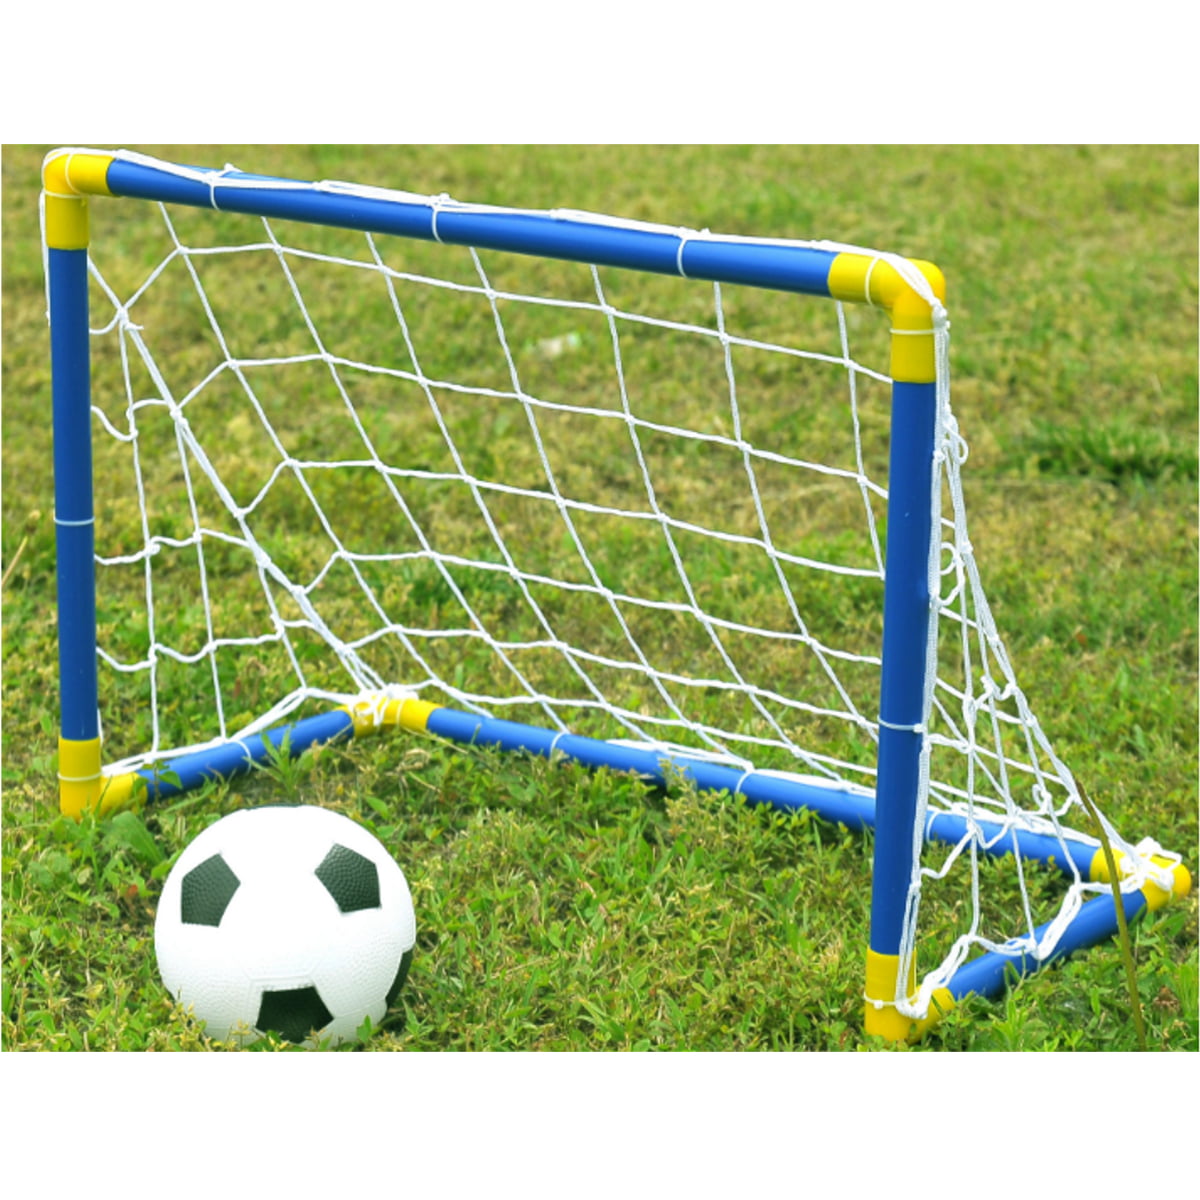 Folding Mini Football Soccer Goal Post Net Set with Pump Kids Sport Toy MP OR 